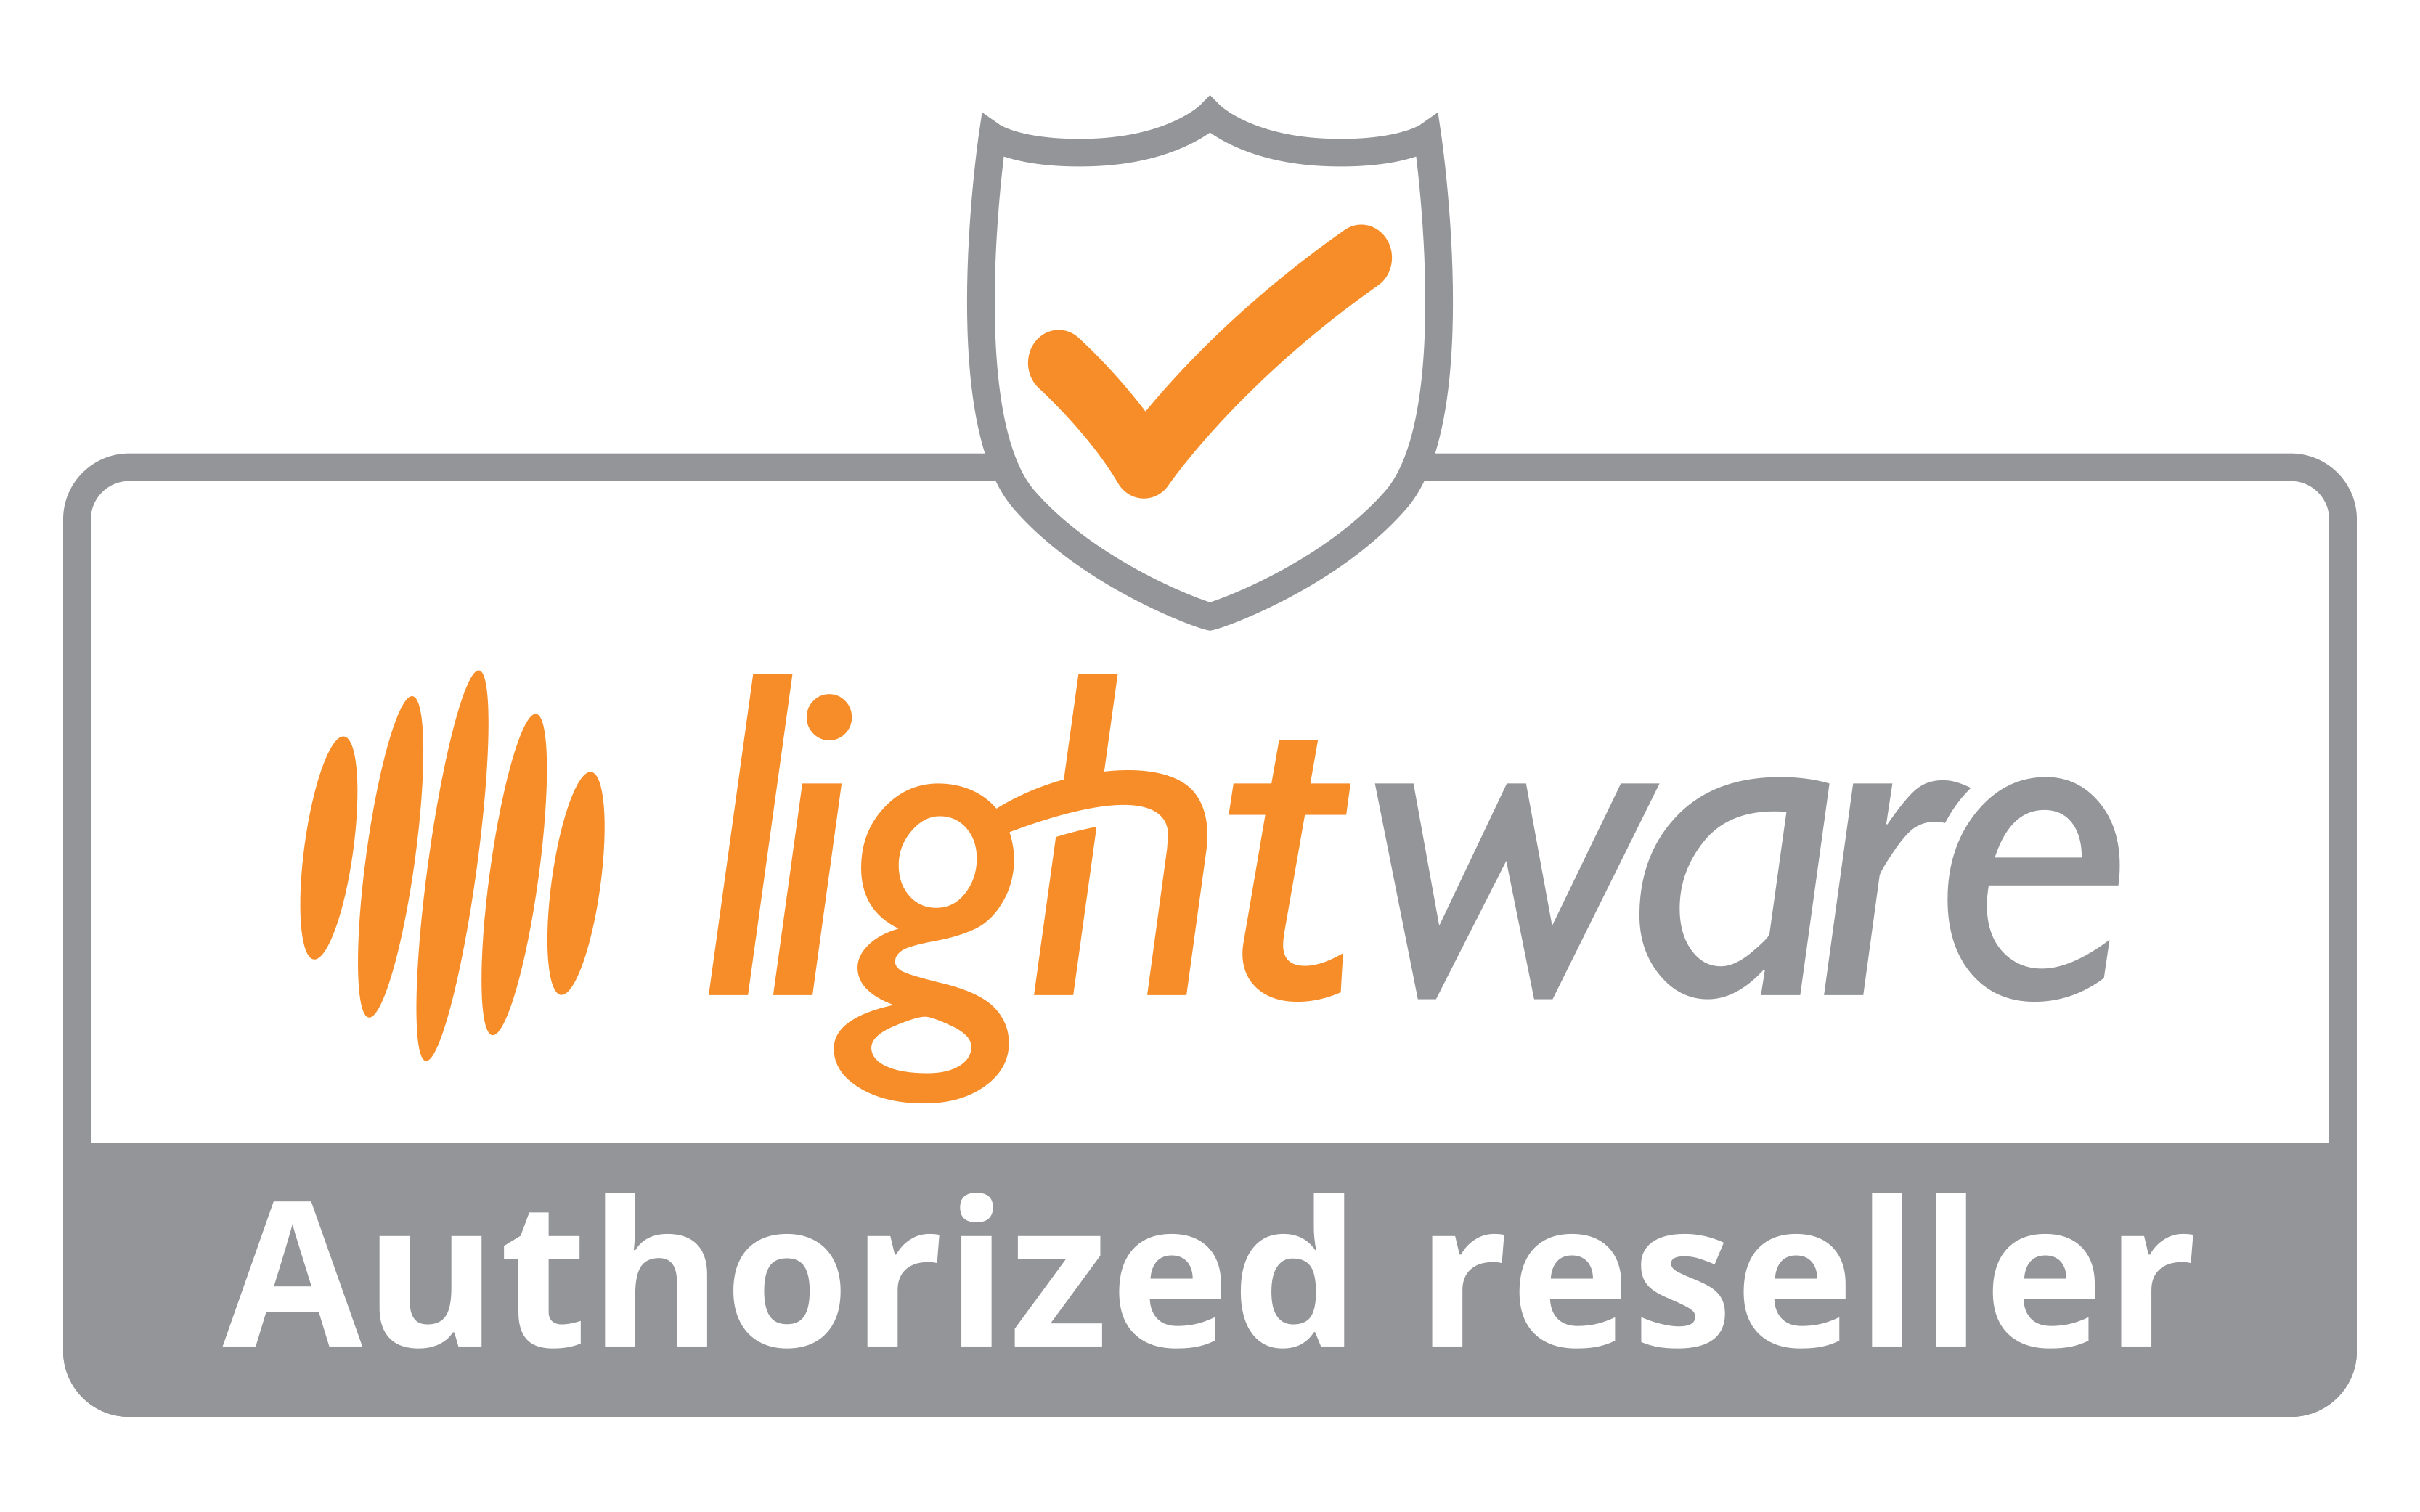 Lightware authorized reseller